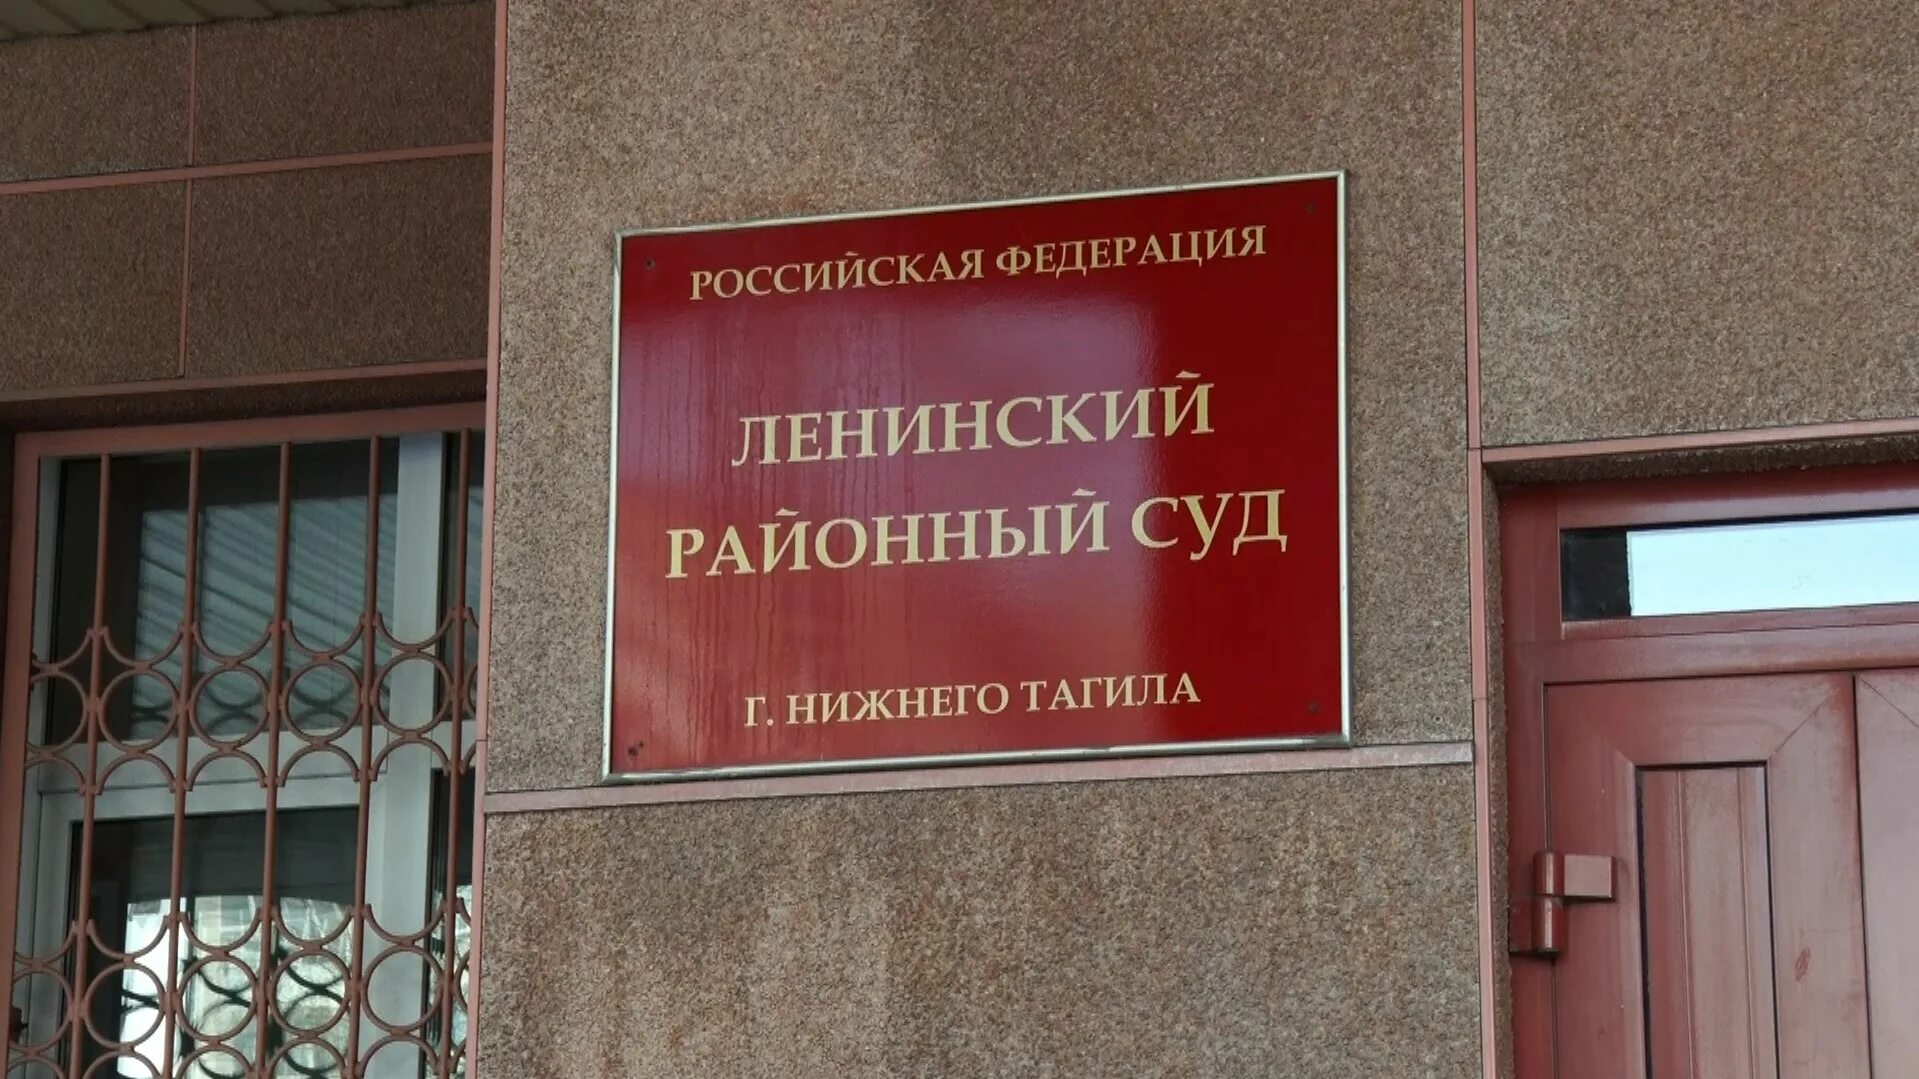 Сайт ленинского суда нижний тагил